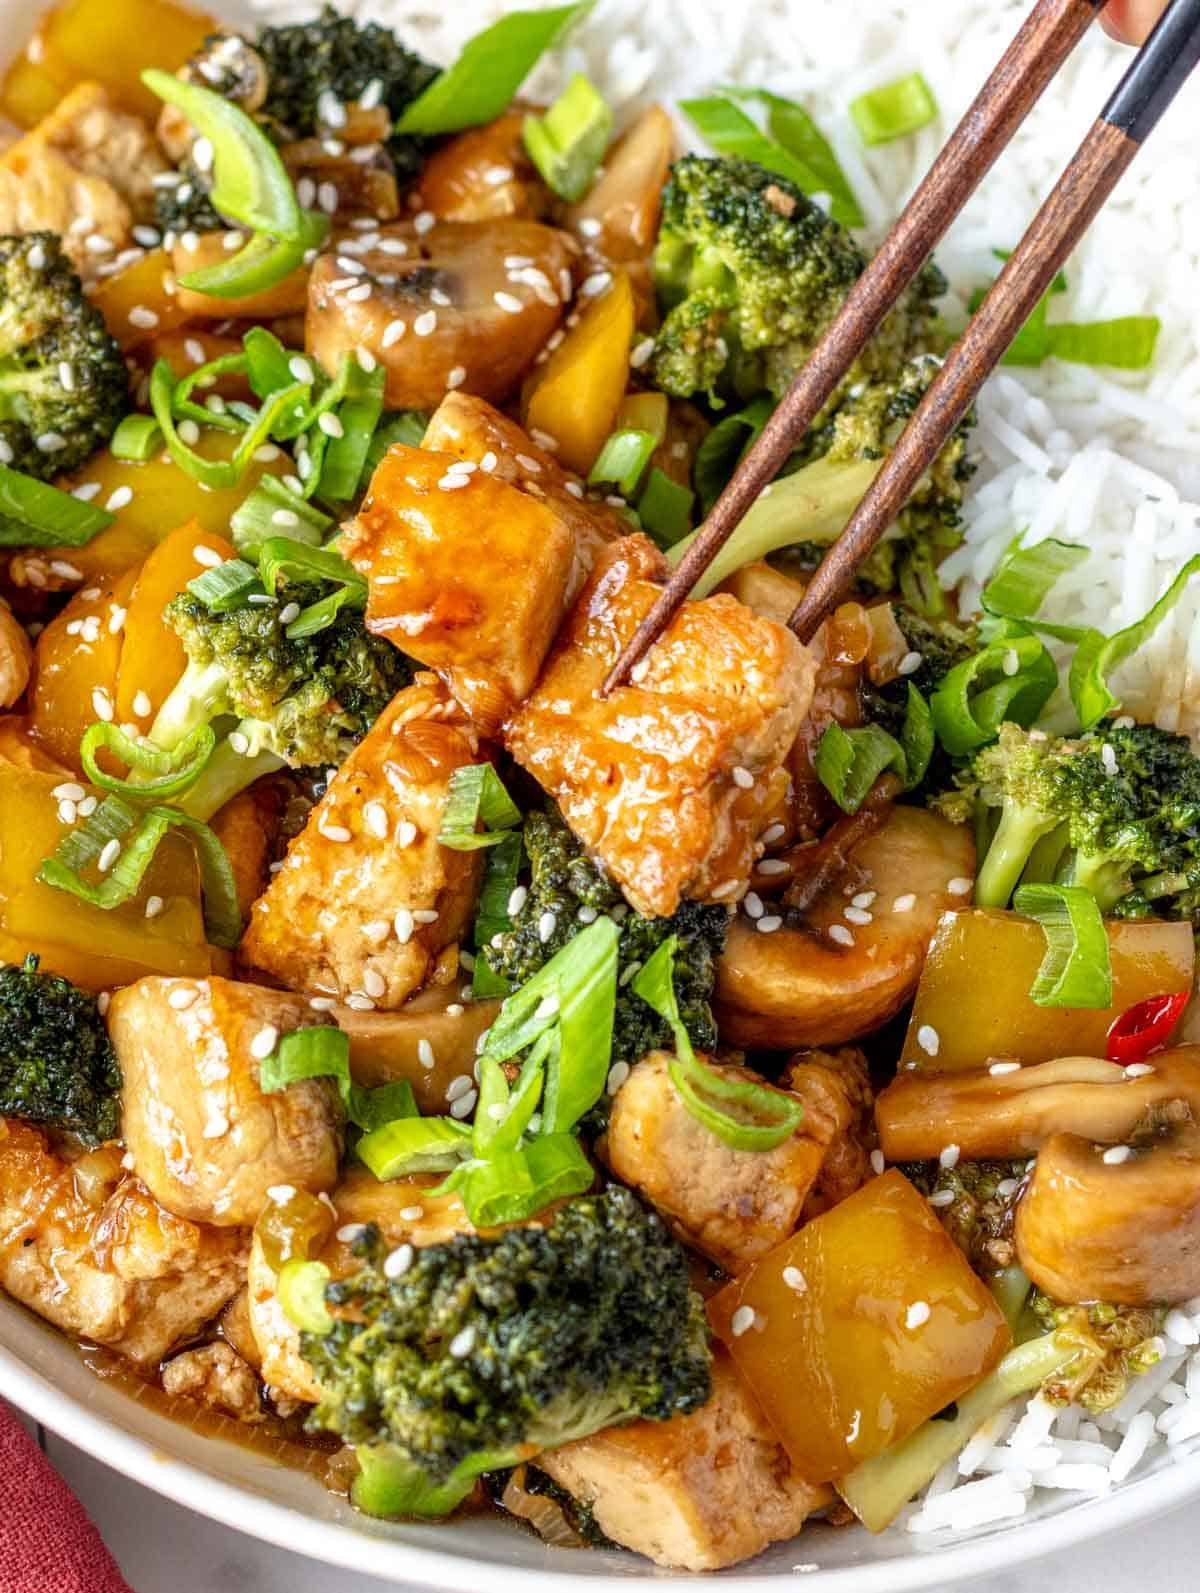 Tofu stir fry with broccoli and chopsticks